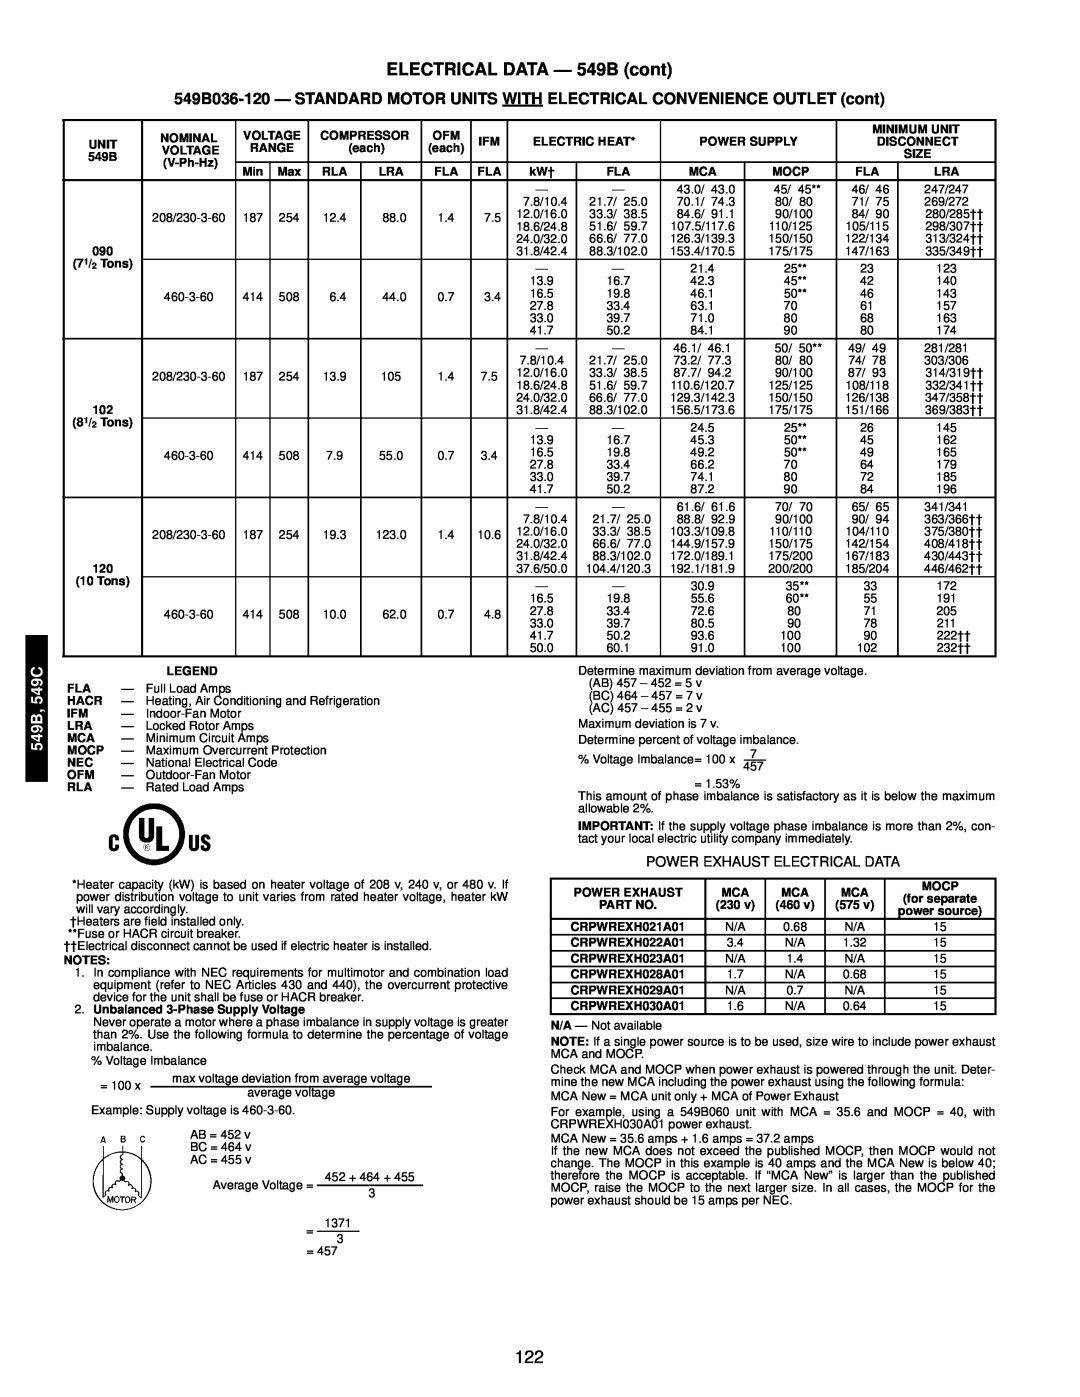 Bryant manual ELECTRICAL DATA — 549B cont, 549B, 549C, 43.0 